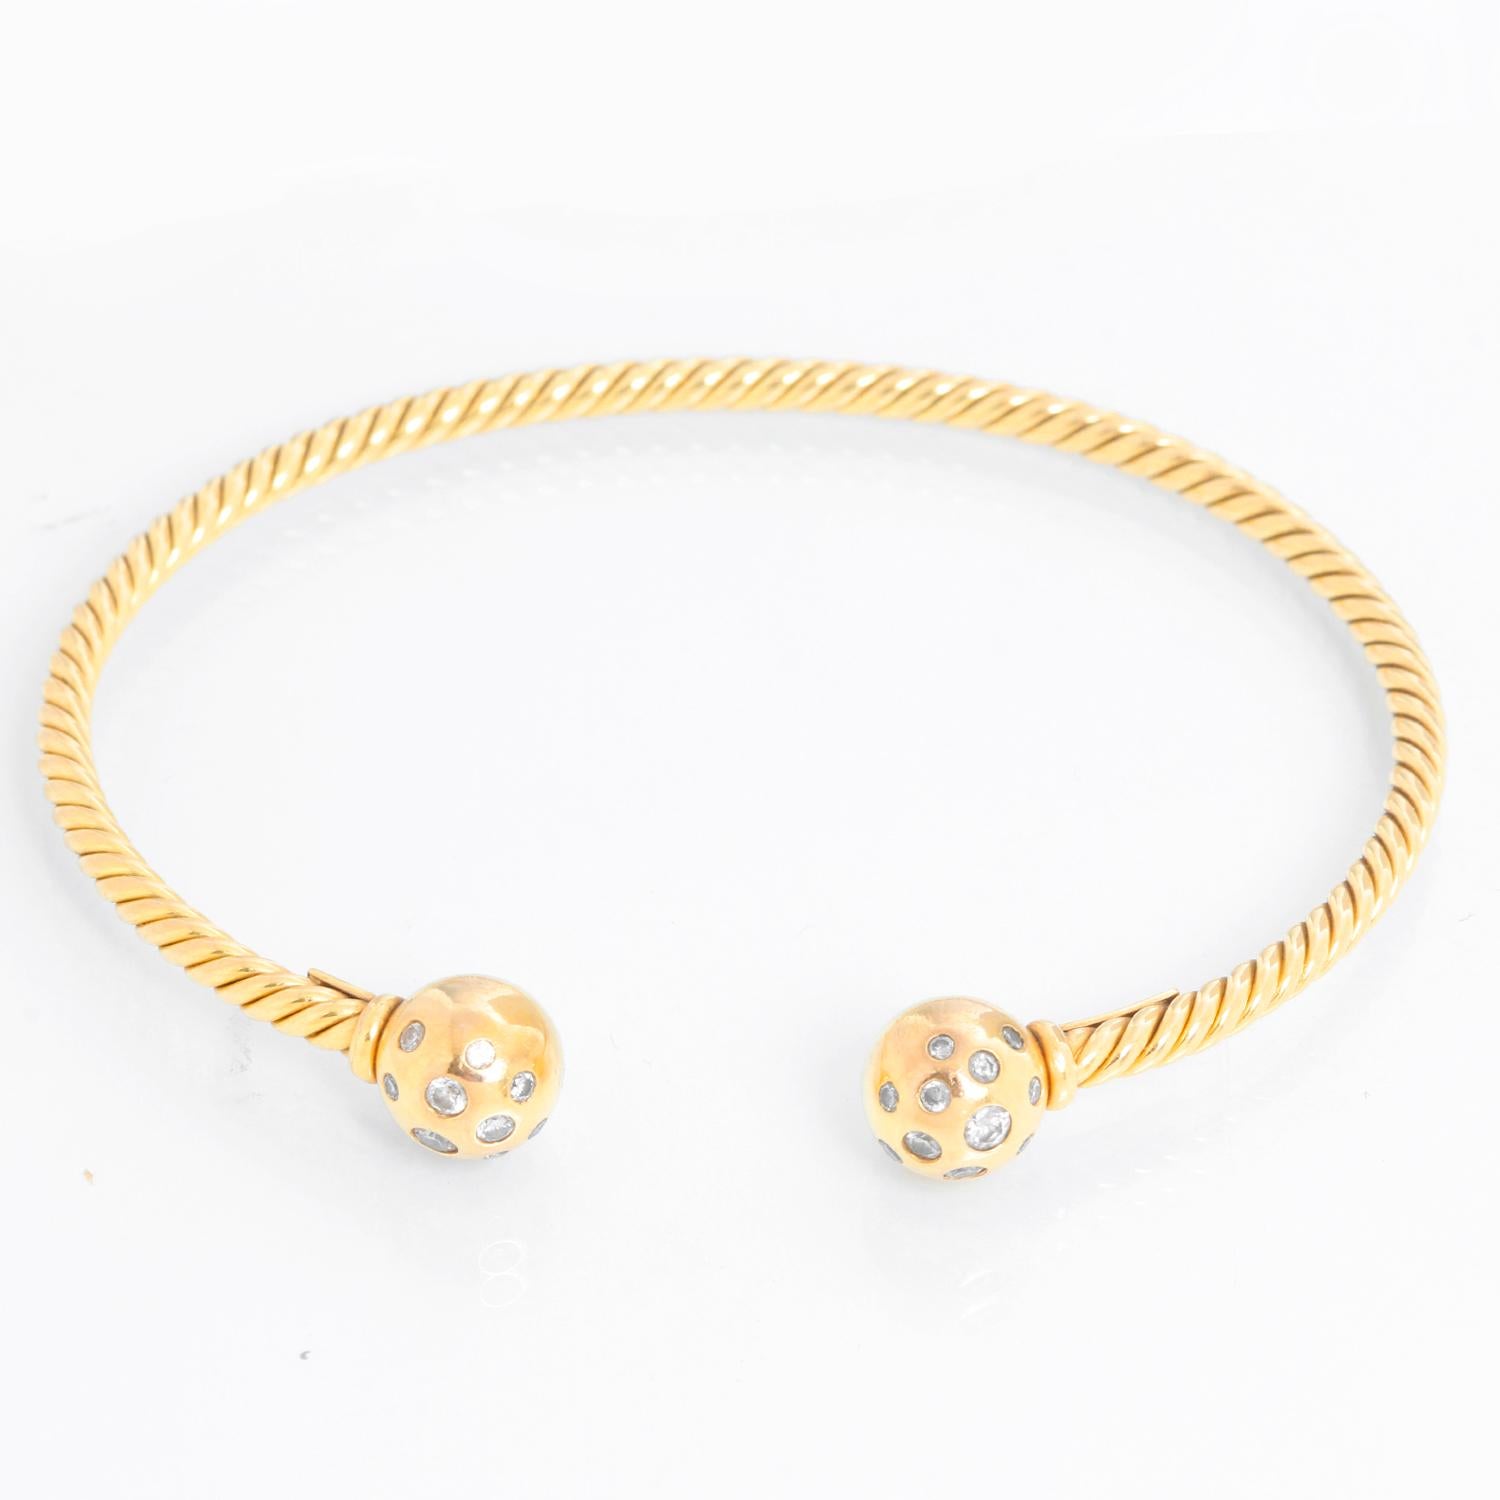 David Yurman Petite Solari Bead Pave Diamond Bracelet - 18K Yellow Gold with Pavé Diamonds weighing .25 carats of diamonds. Beads measure 6 mm. . Bracelet measures 2.6 mm. Pre-owned with custom box .